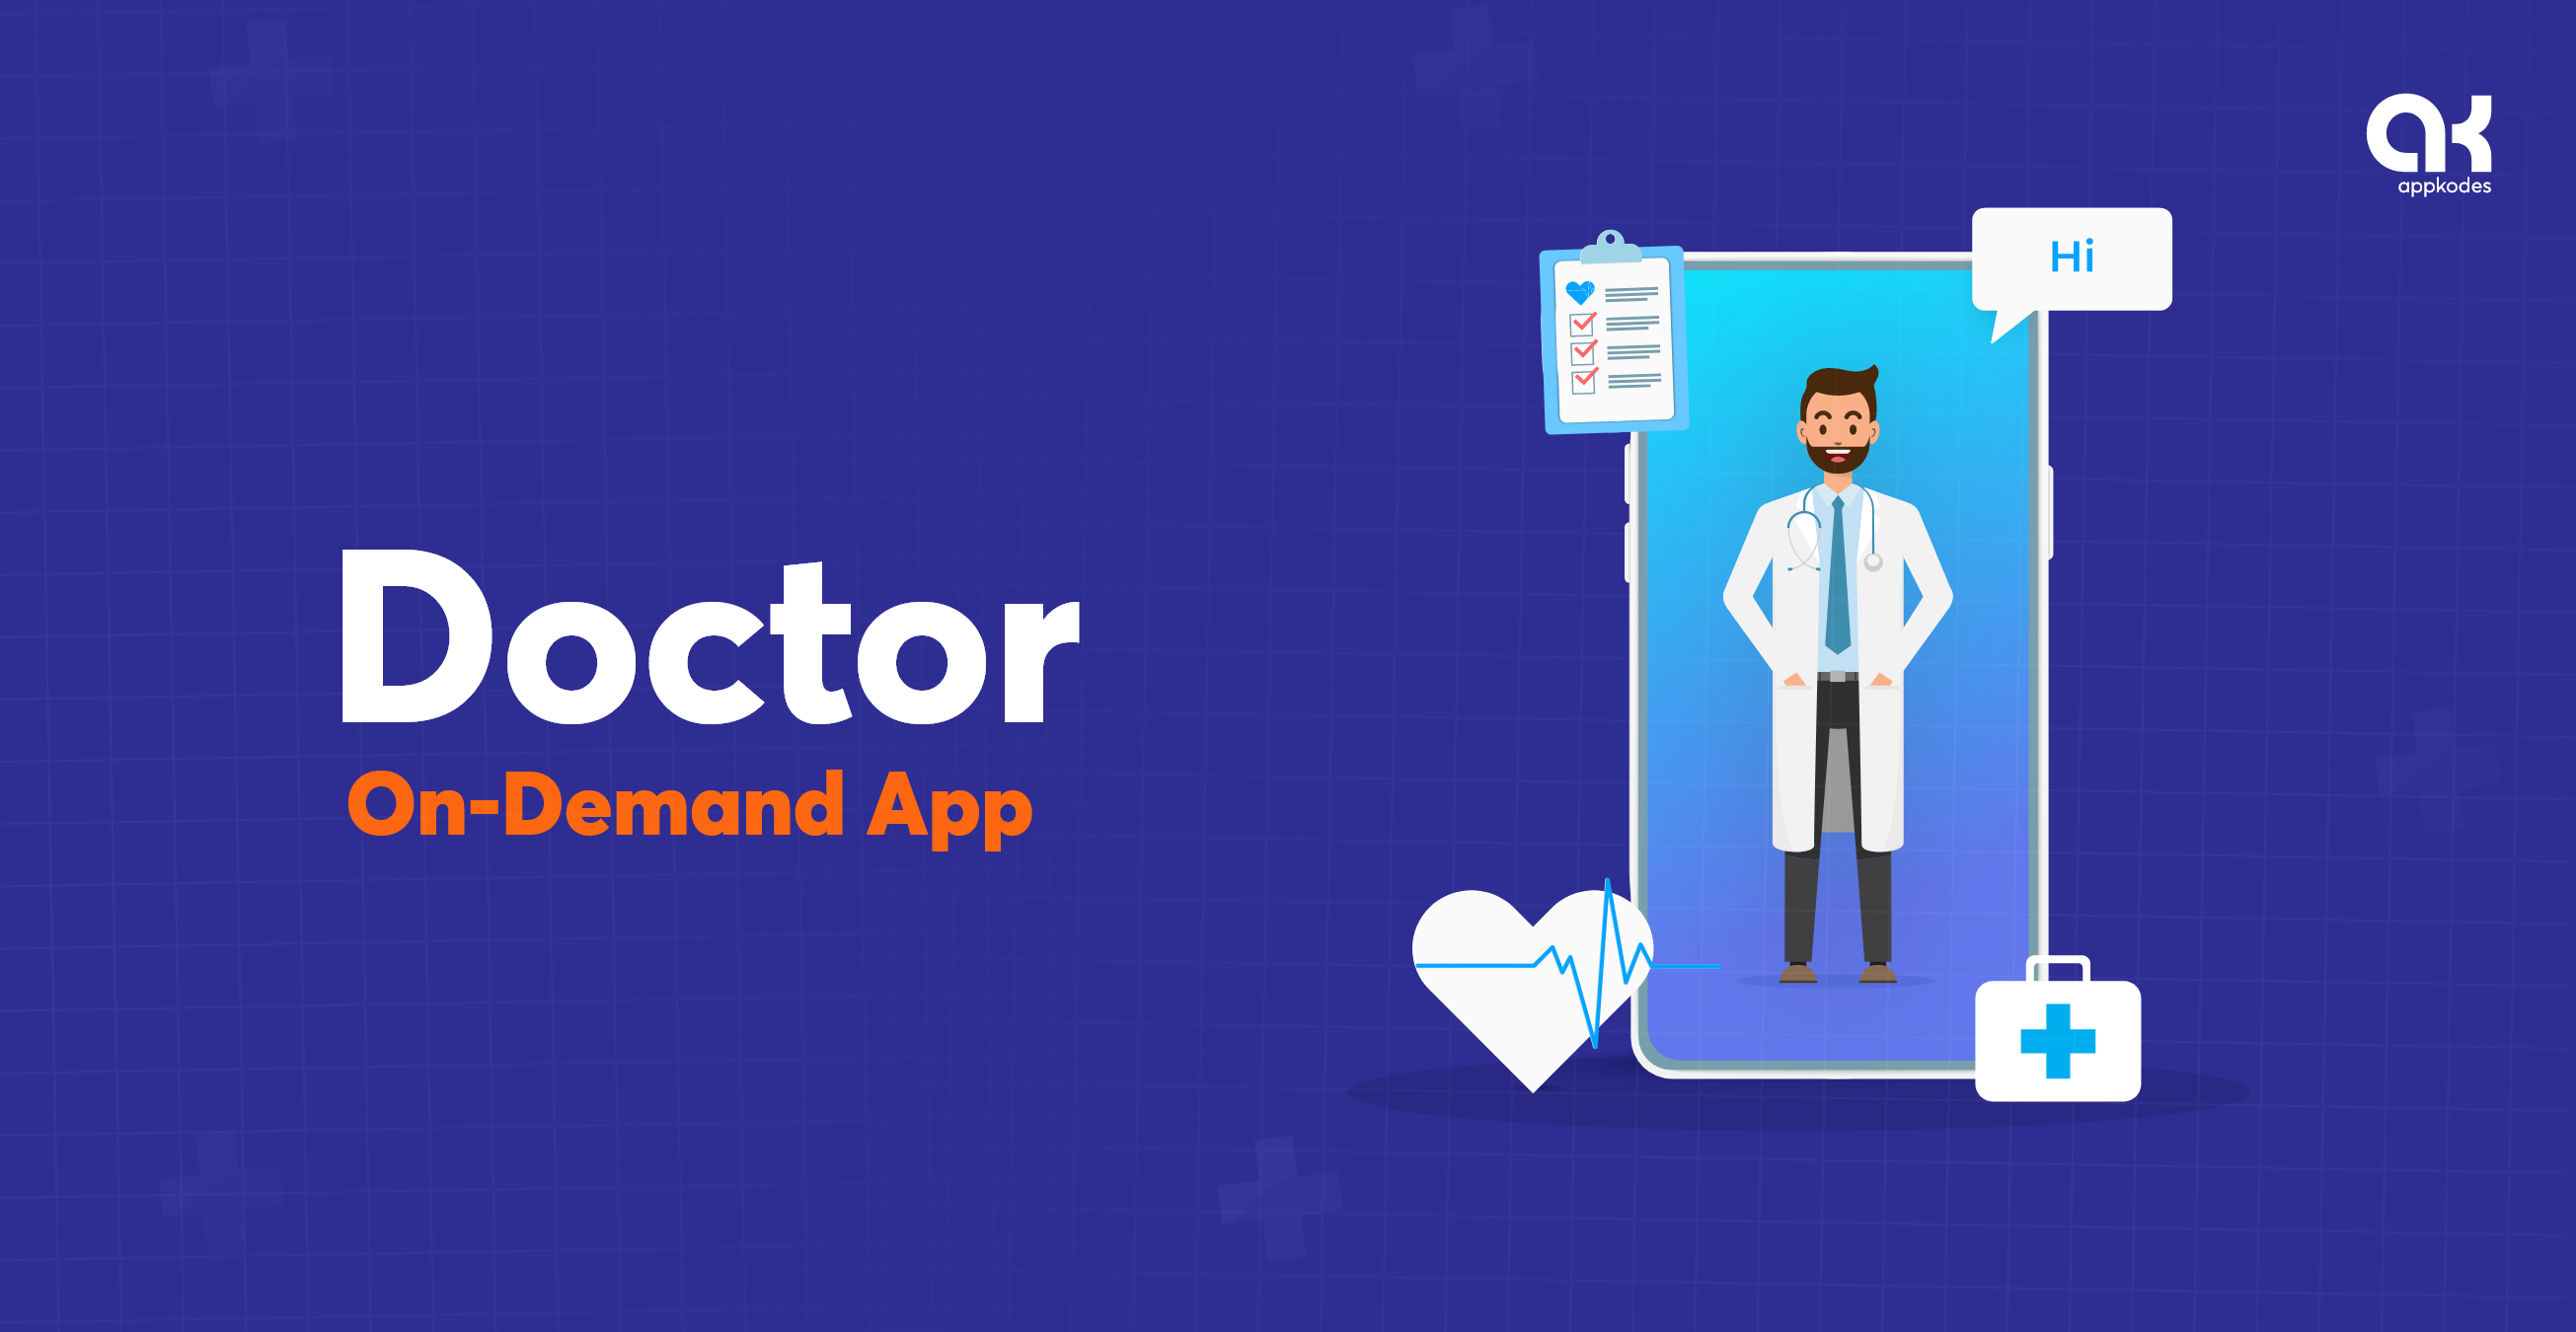 Doctor On-Demand App